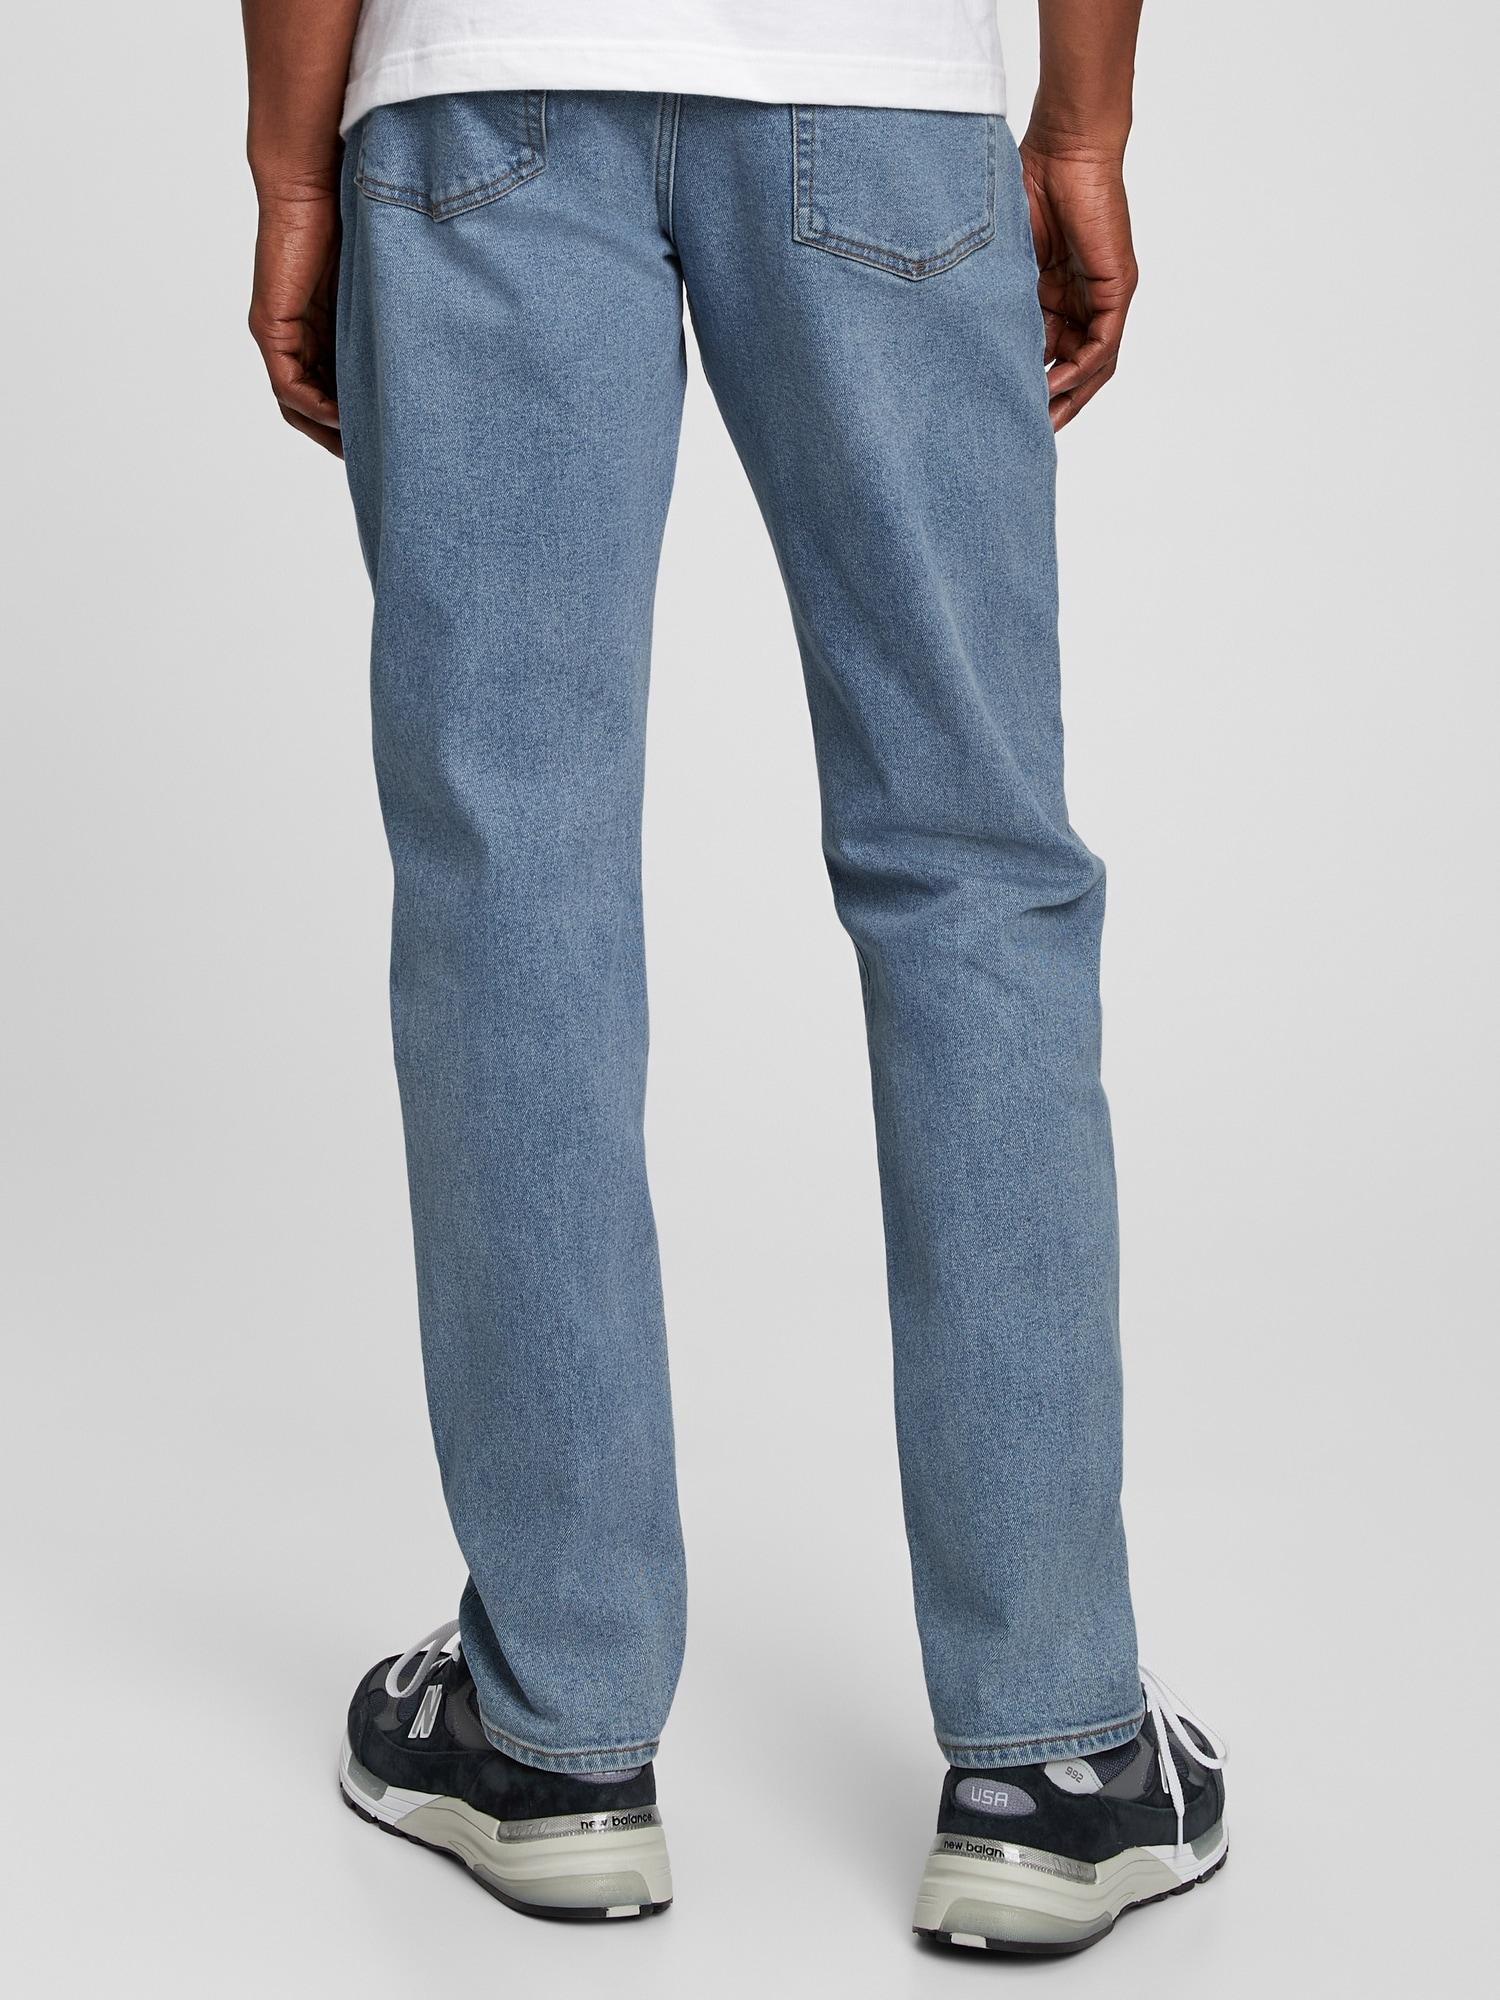 Gap Denim 365temp Slim Performance Jeans With Flex With Washwelltm in Light  Wash (Blue) for Men - Lyst